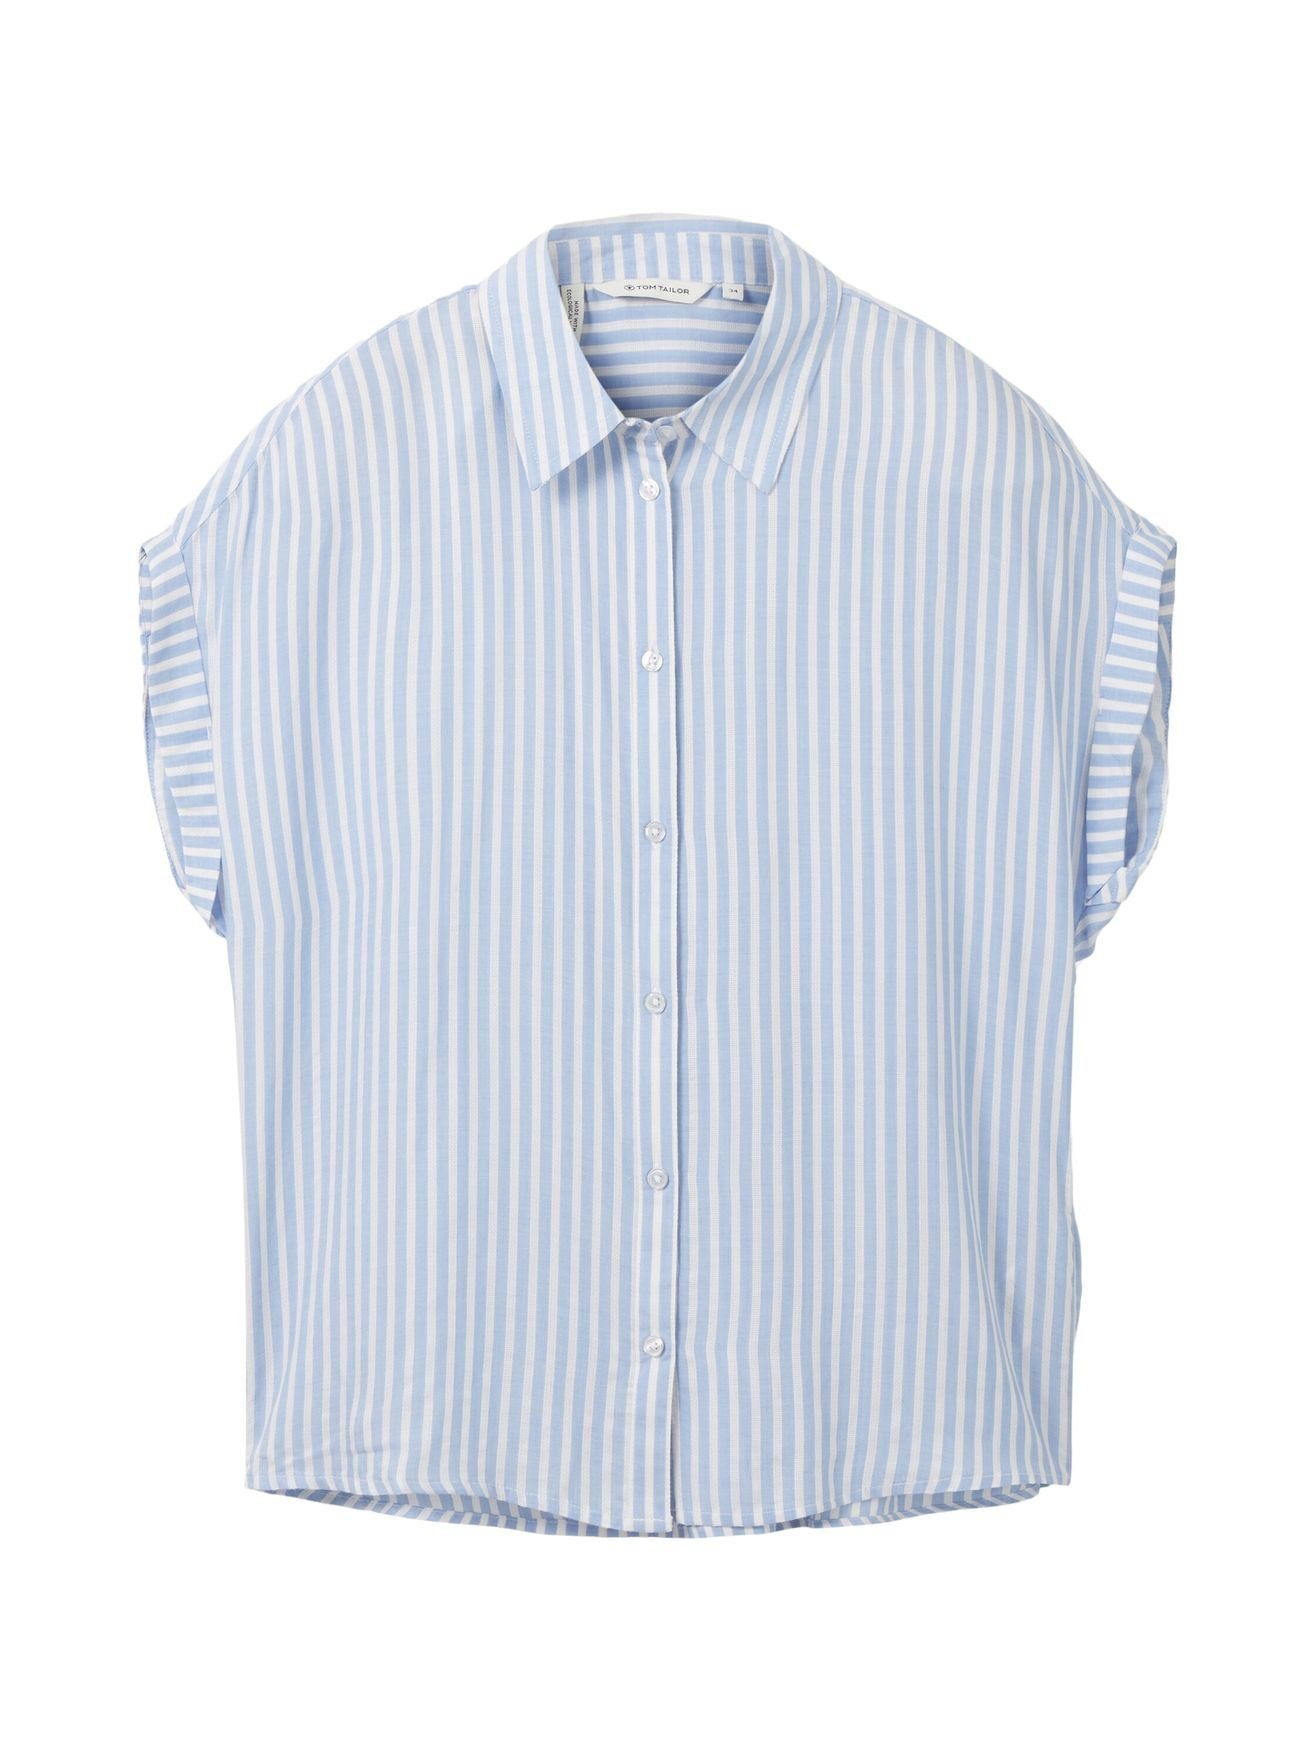 Übergröße 5364 in TAILOR Gestreifte Blau Shirt Kurzarm Blusenshirt Bluse TOM